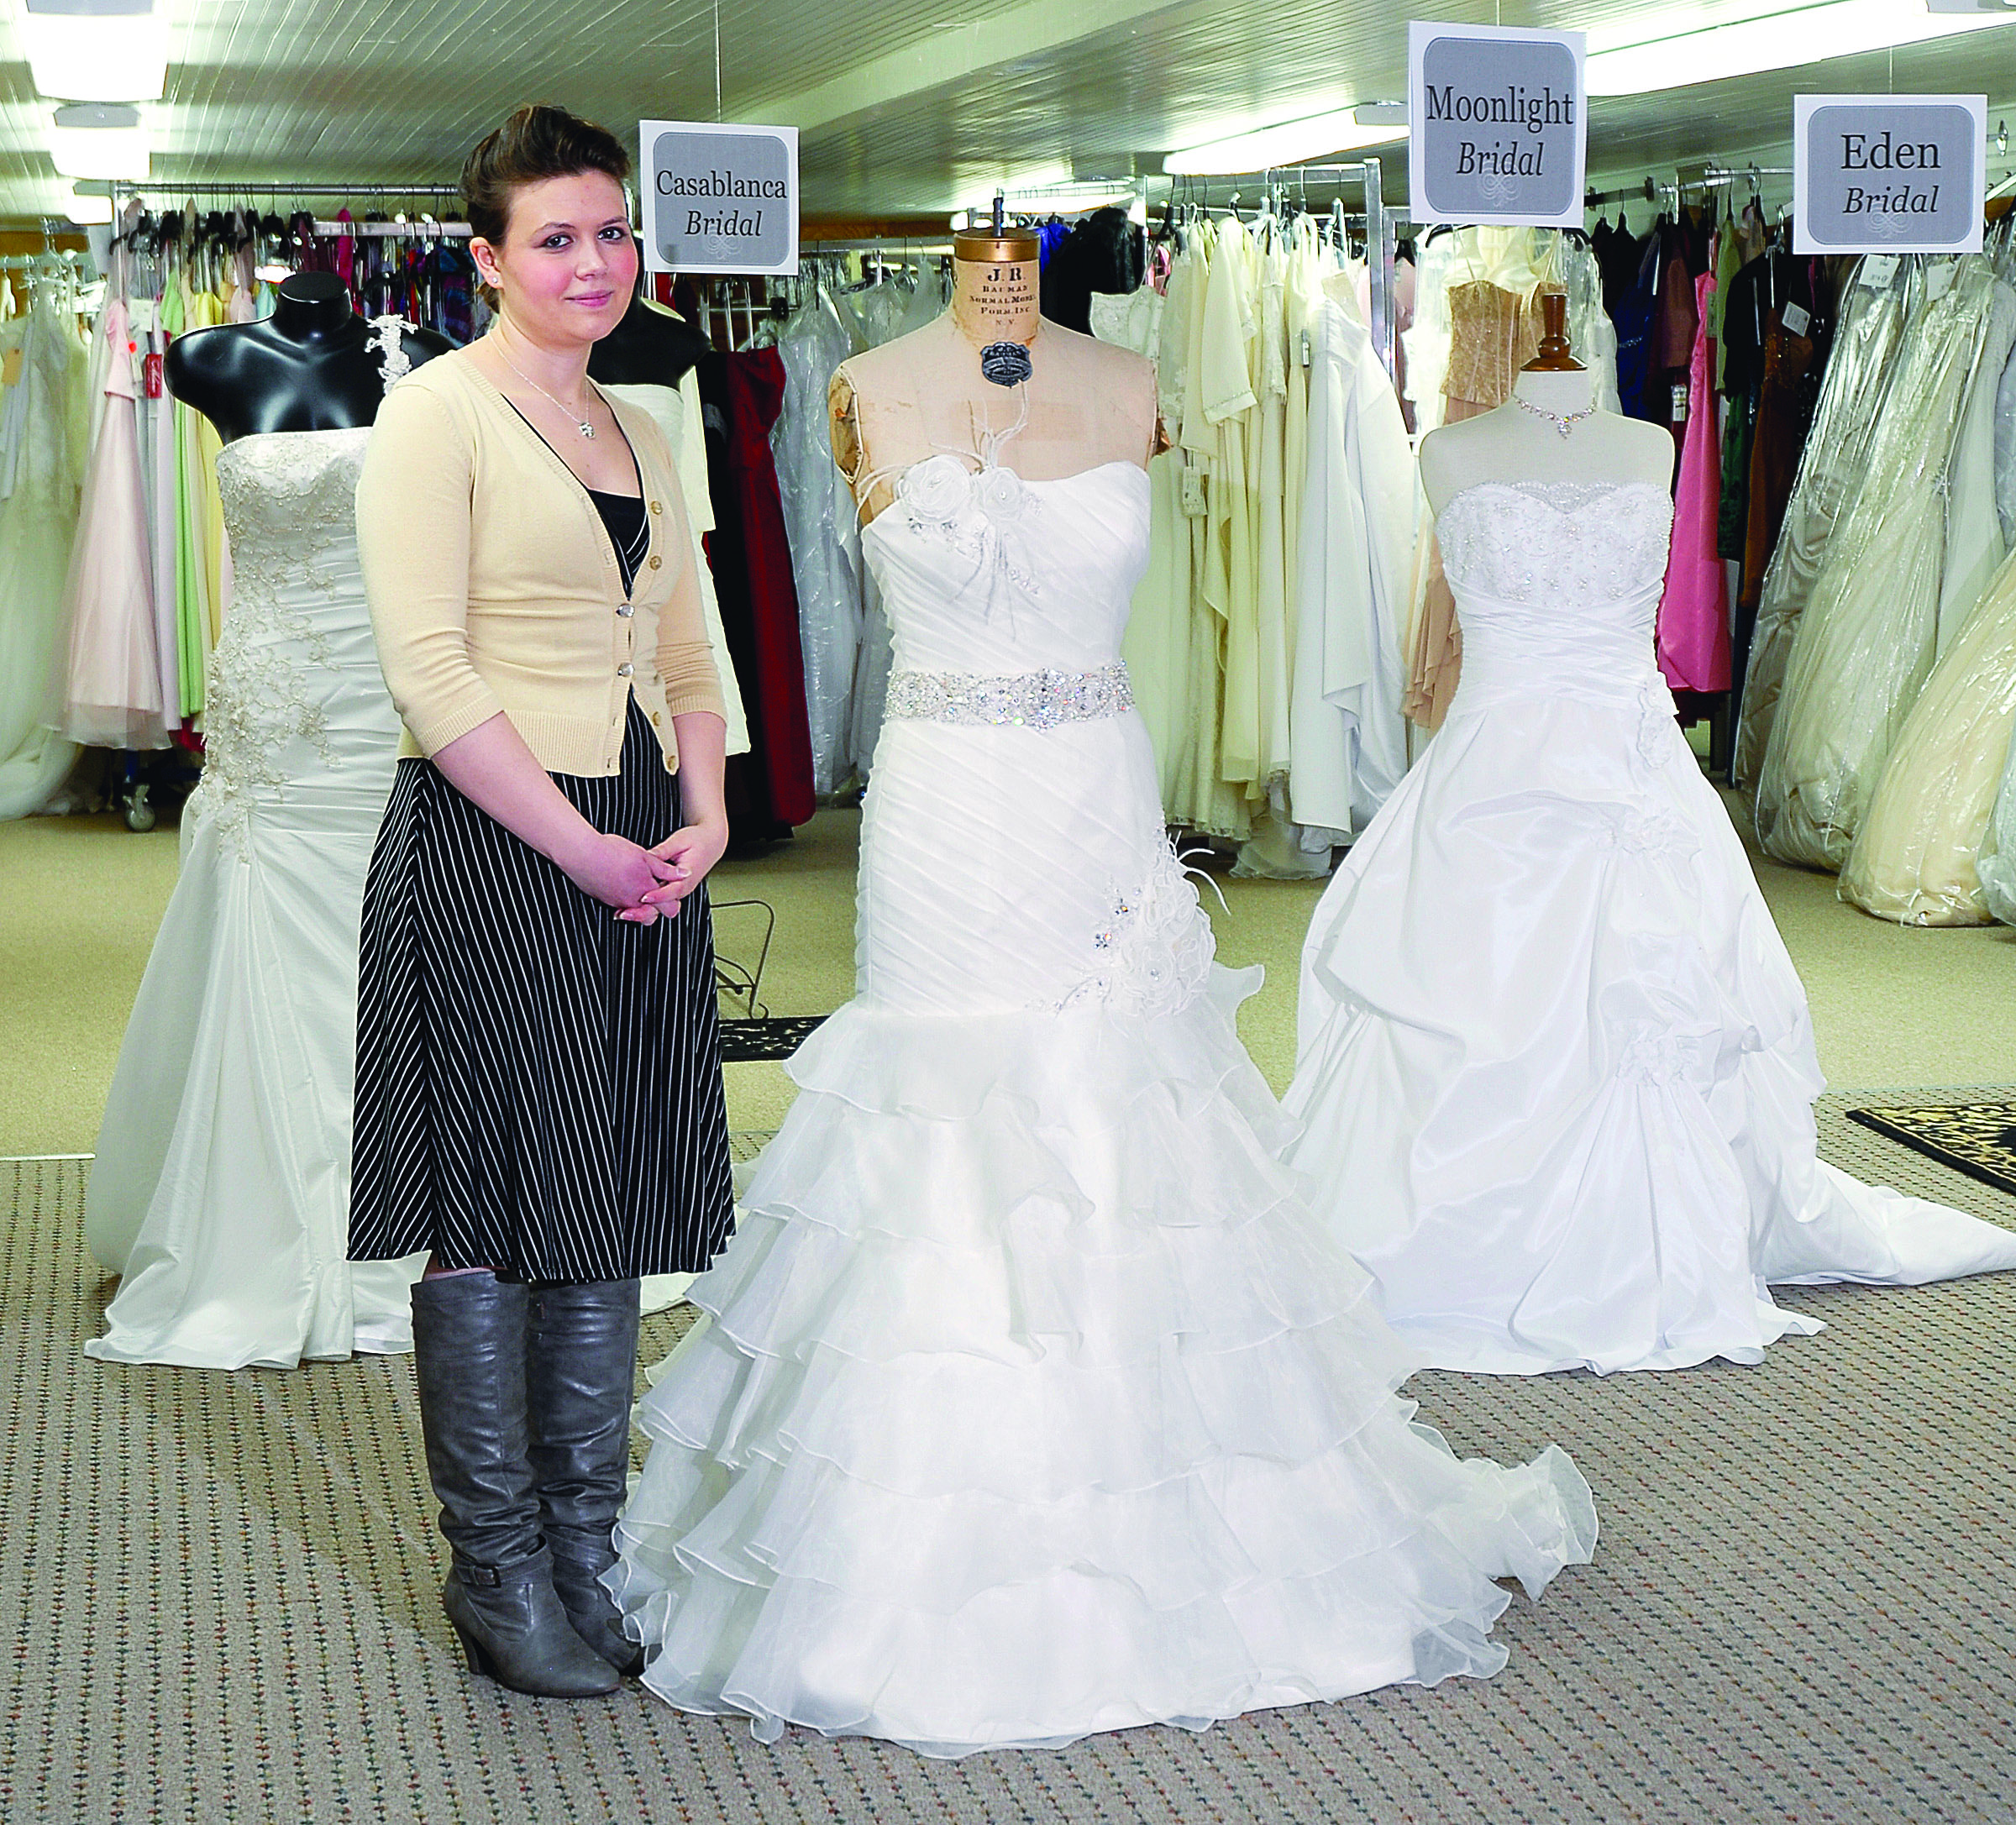 Black Diamond Bridal employee Jesseca Larson stands next to a dress from Moonlight Bridal on Wednesday. Chris Tucker/Peninsula Daily News